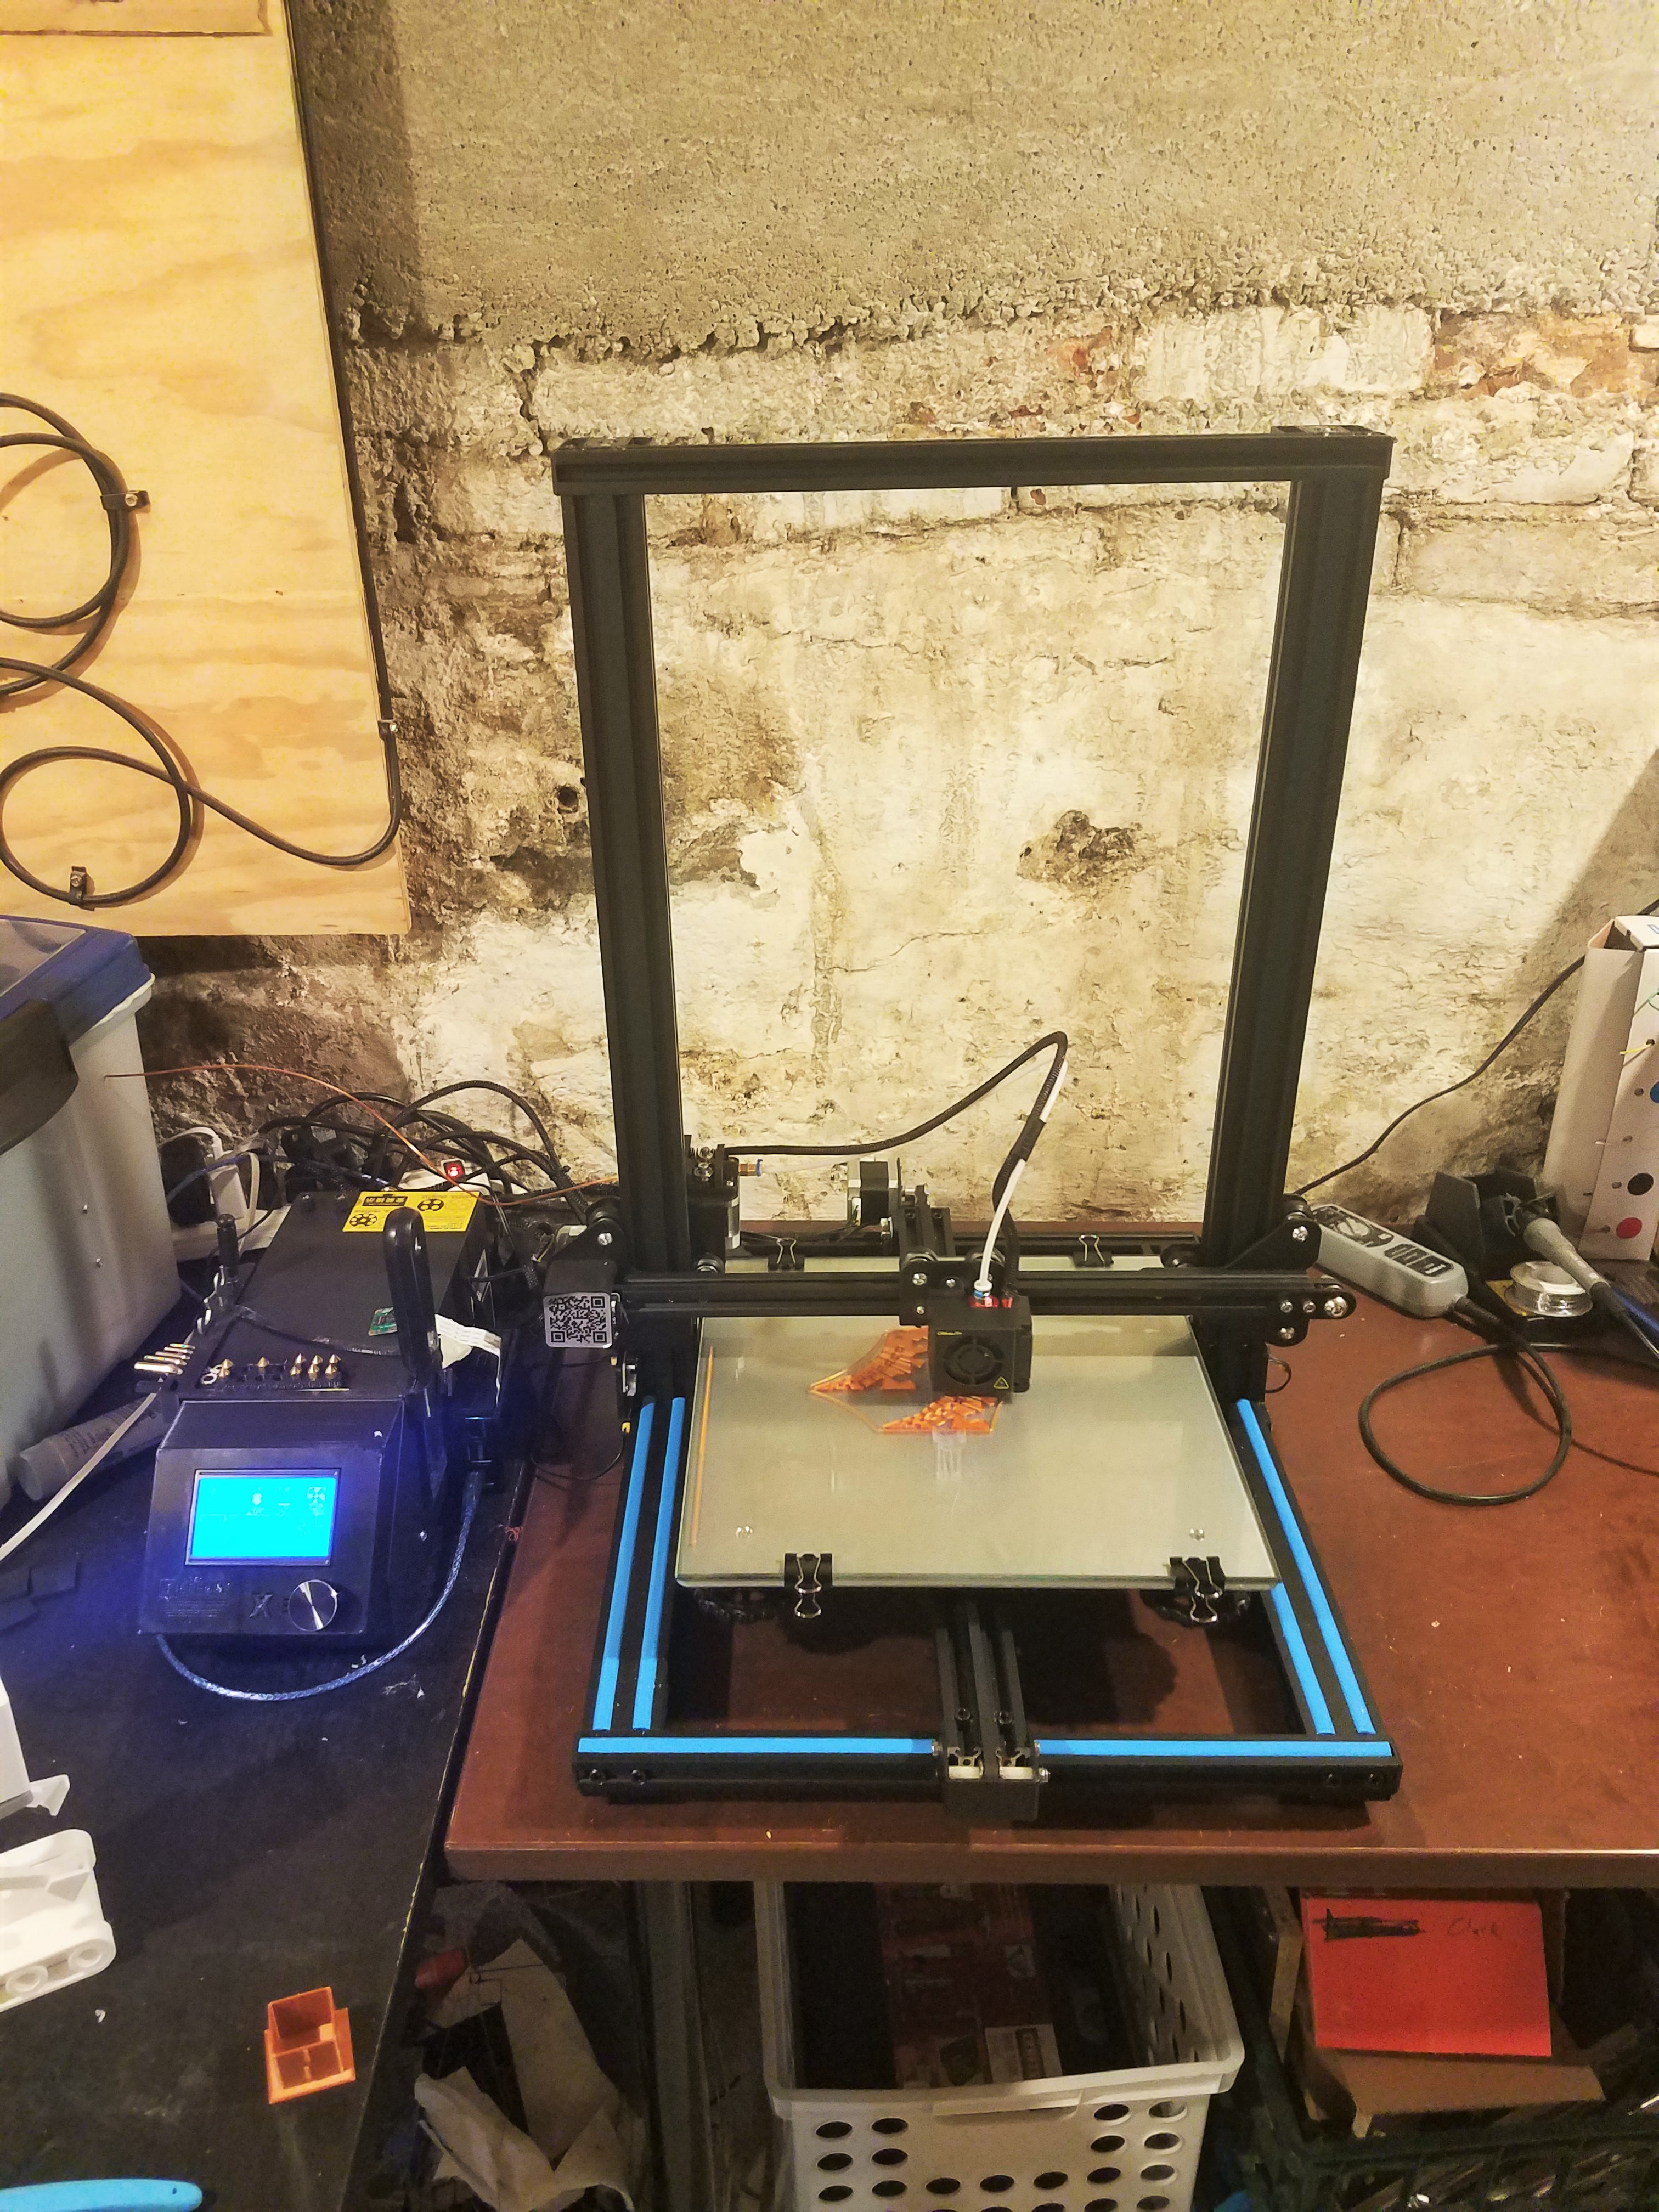 My CR-10s 3D printer